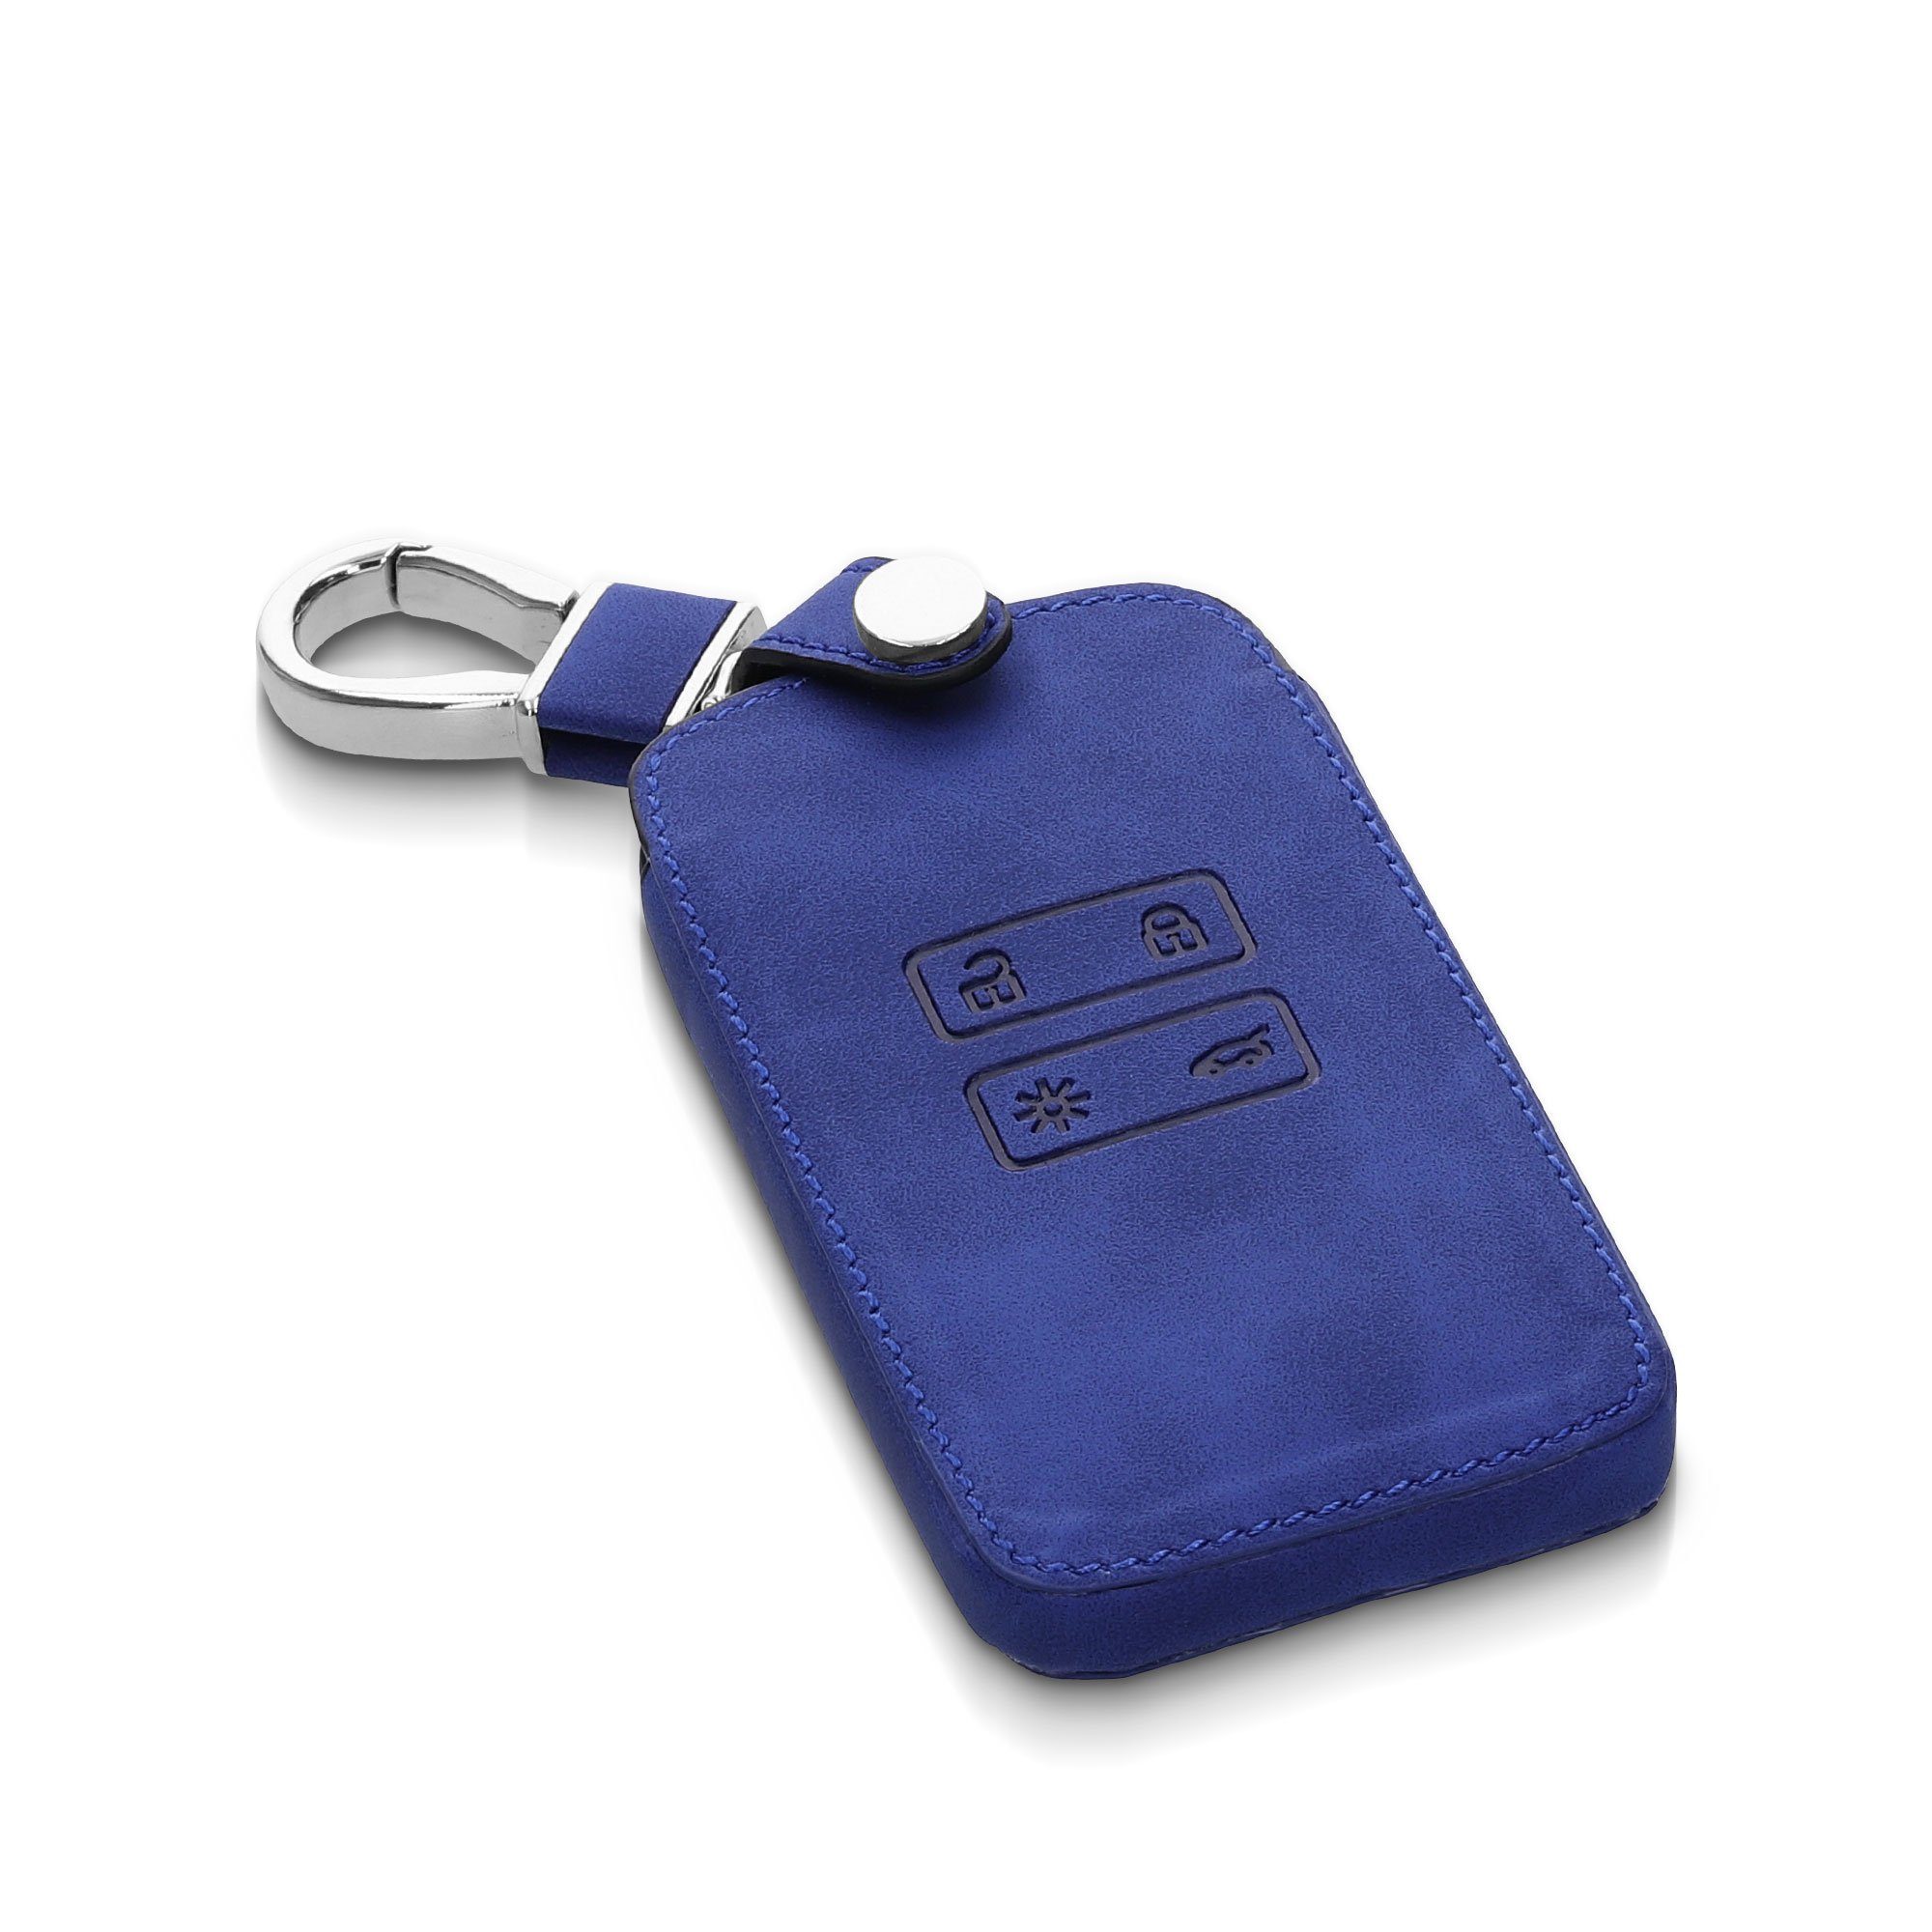 Schutzhülle Schlüsselhülle Schlüsseltasche Renault, Autoschlüssel - Cover kwmobile Kunstleder Dunkelblau Hülle Nubuklederoptik für